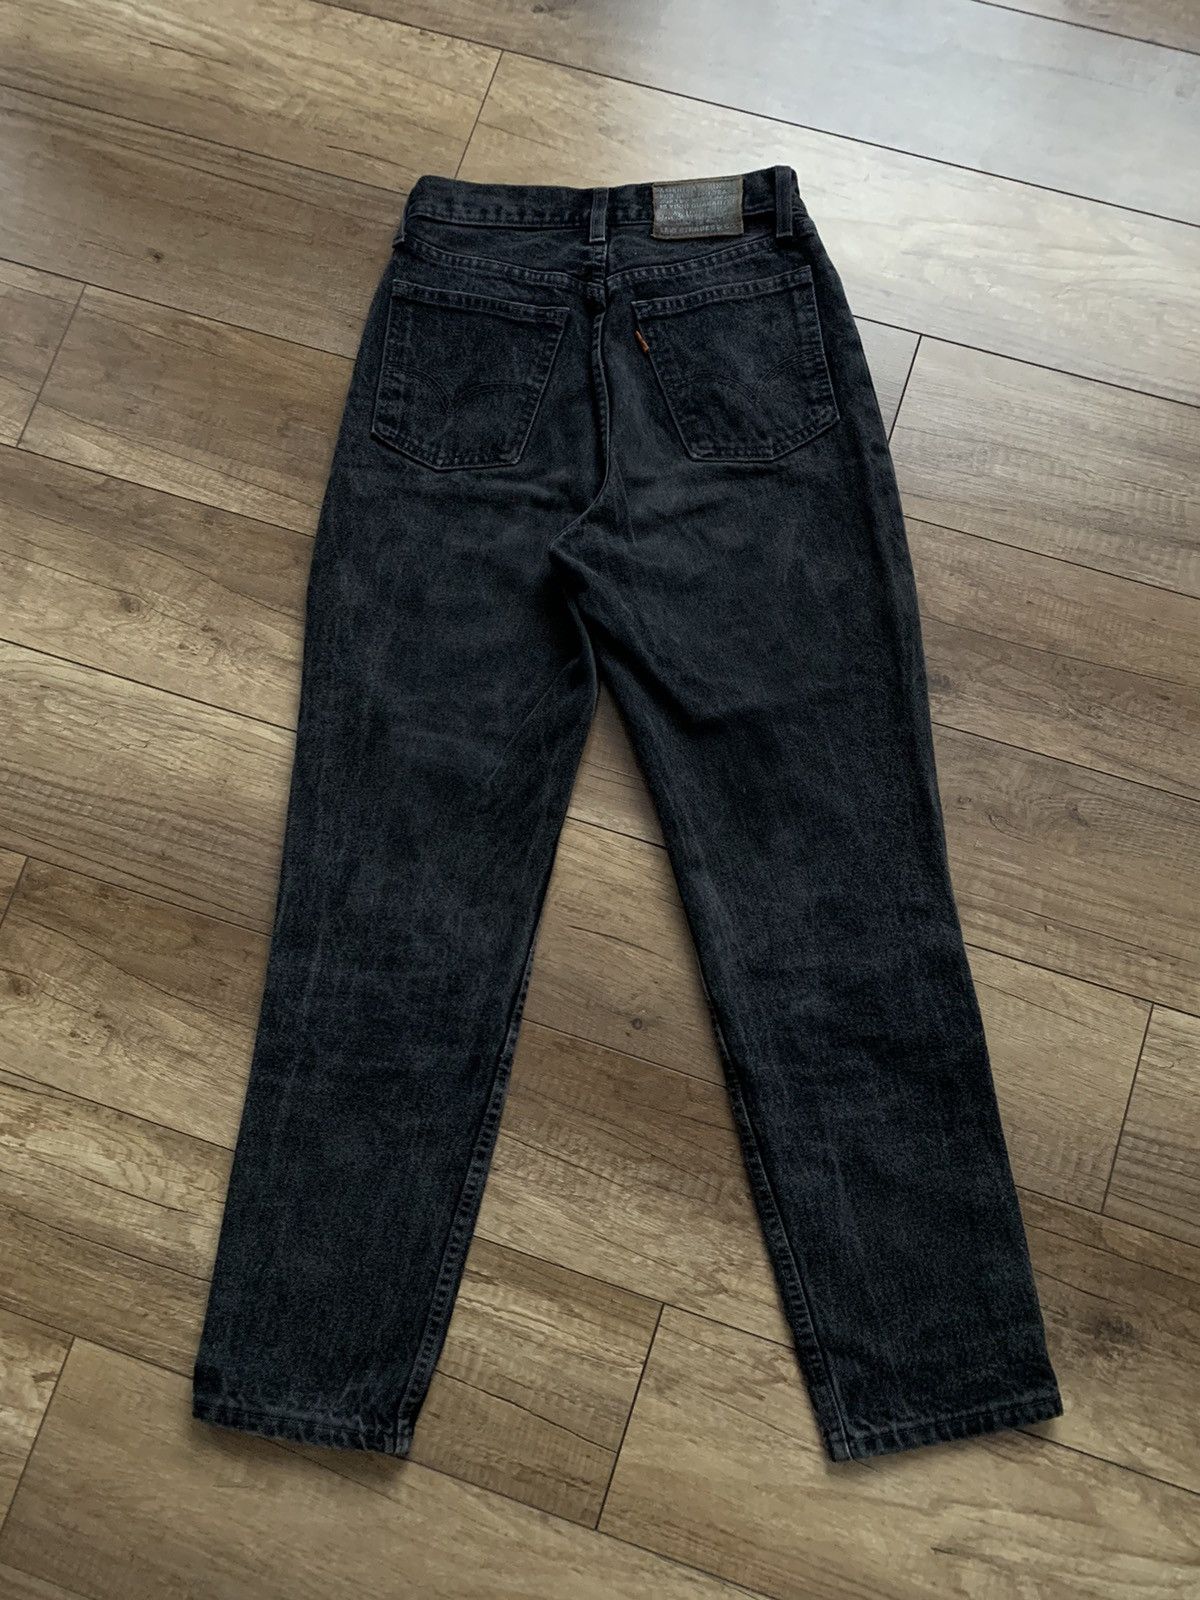 Vintage Levis 881 Denim Jeans Fit Guide Vintage 90s Orange Tab | Grailed